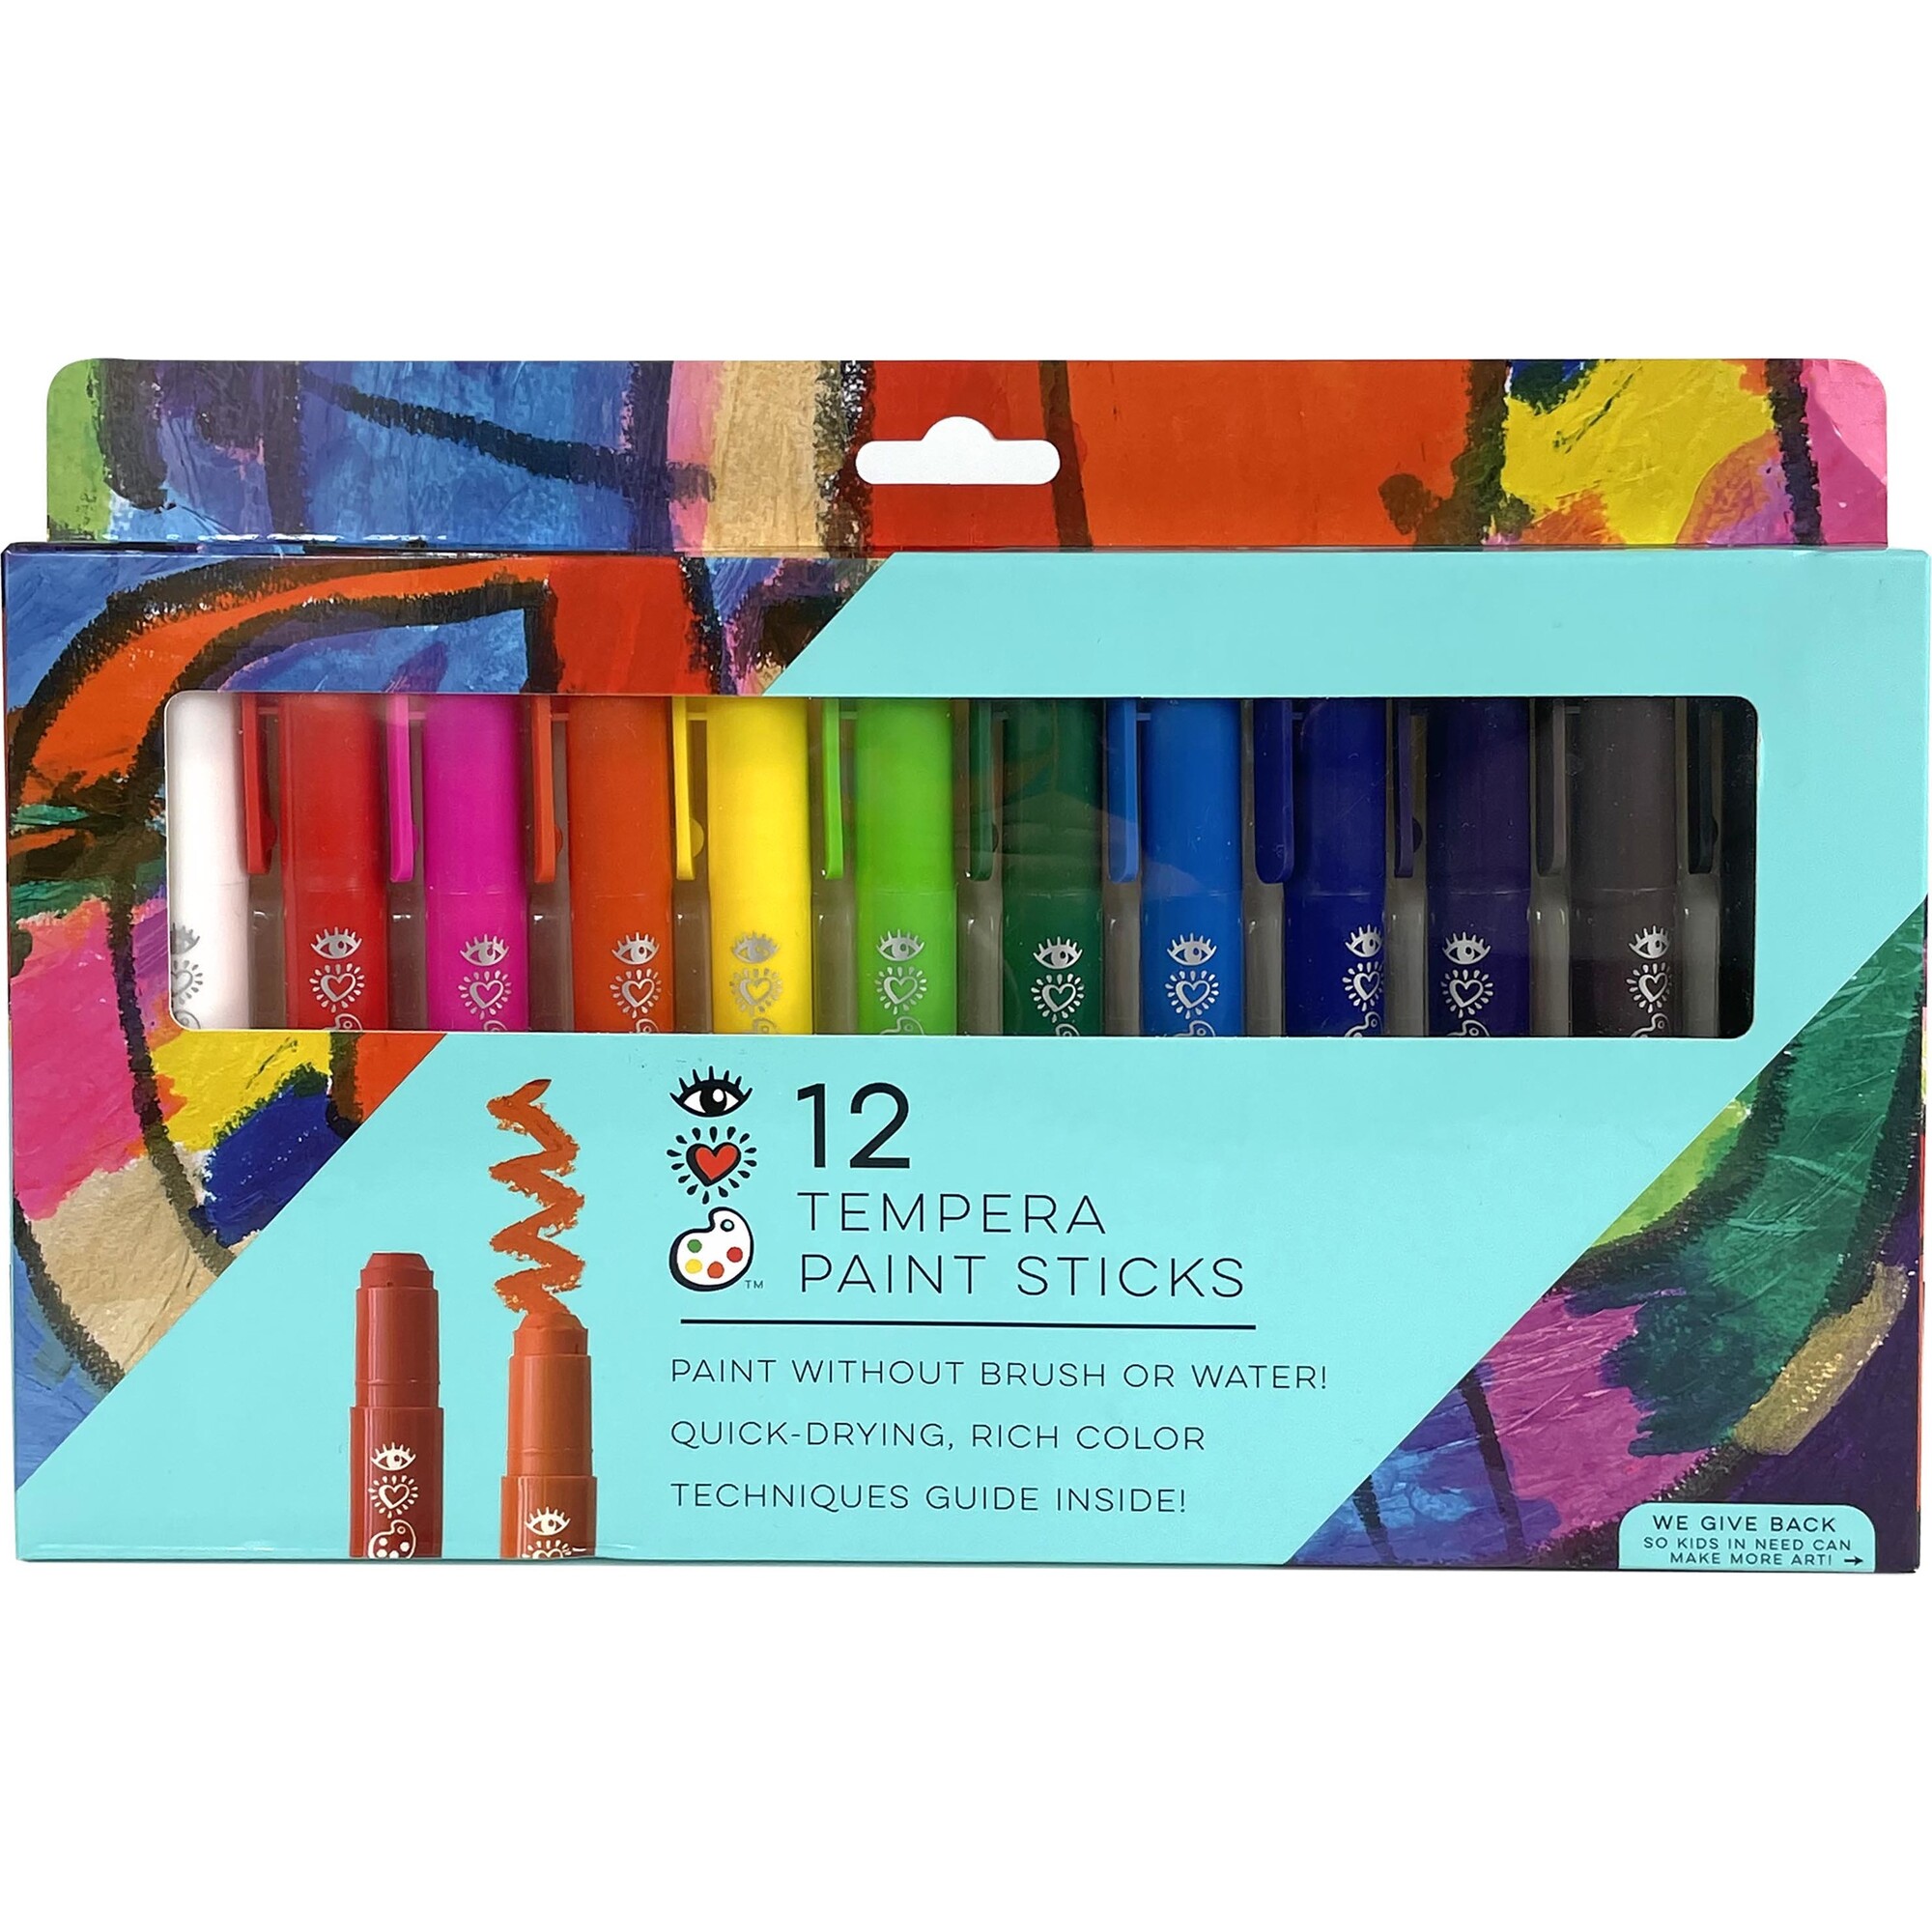 iHeartArt 24 Tempera Paint Sticks – brightstripes